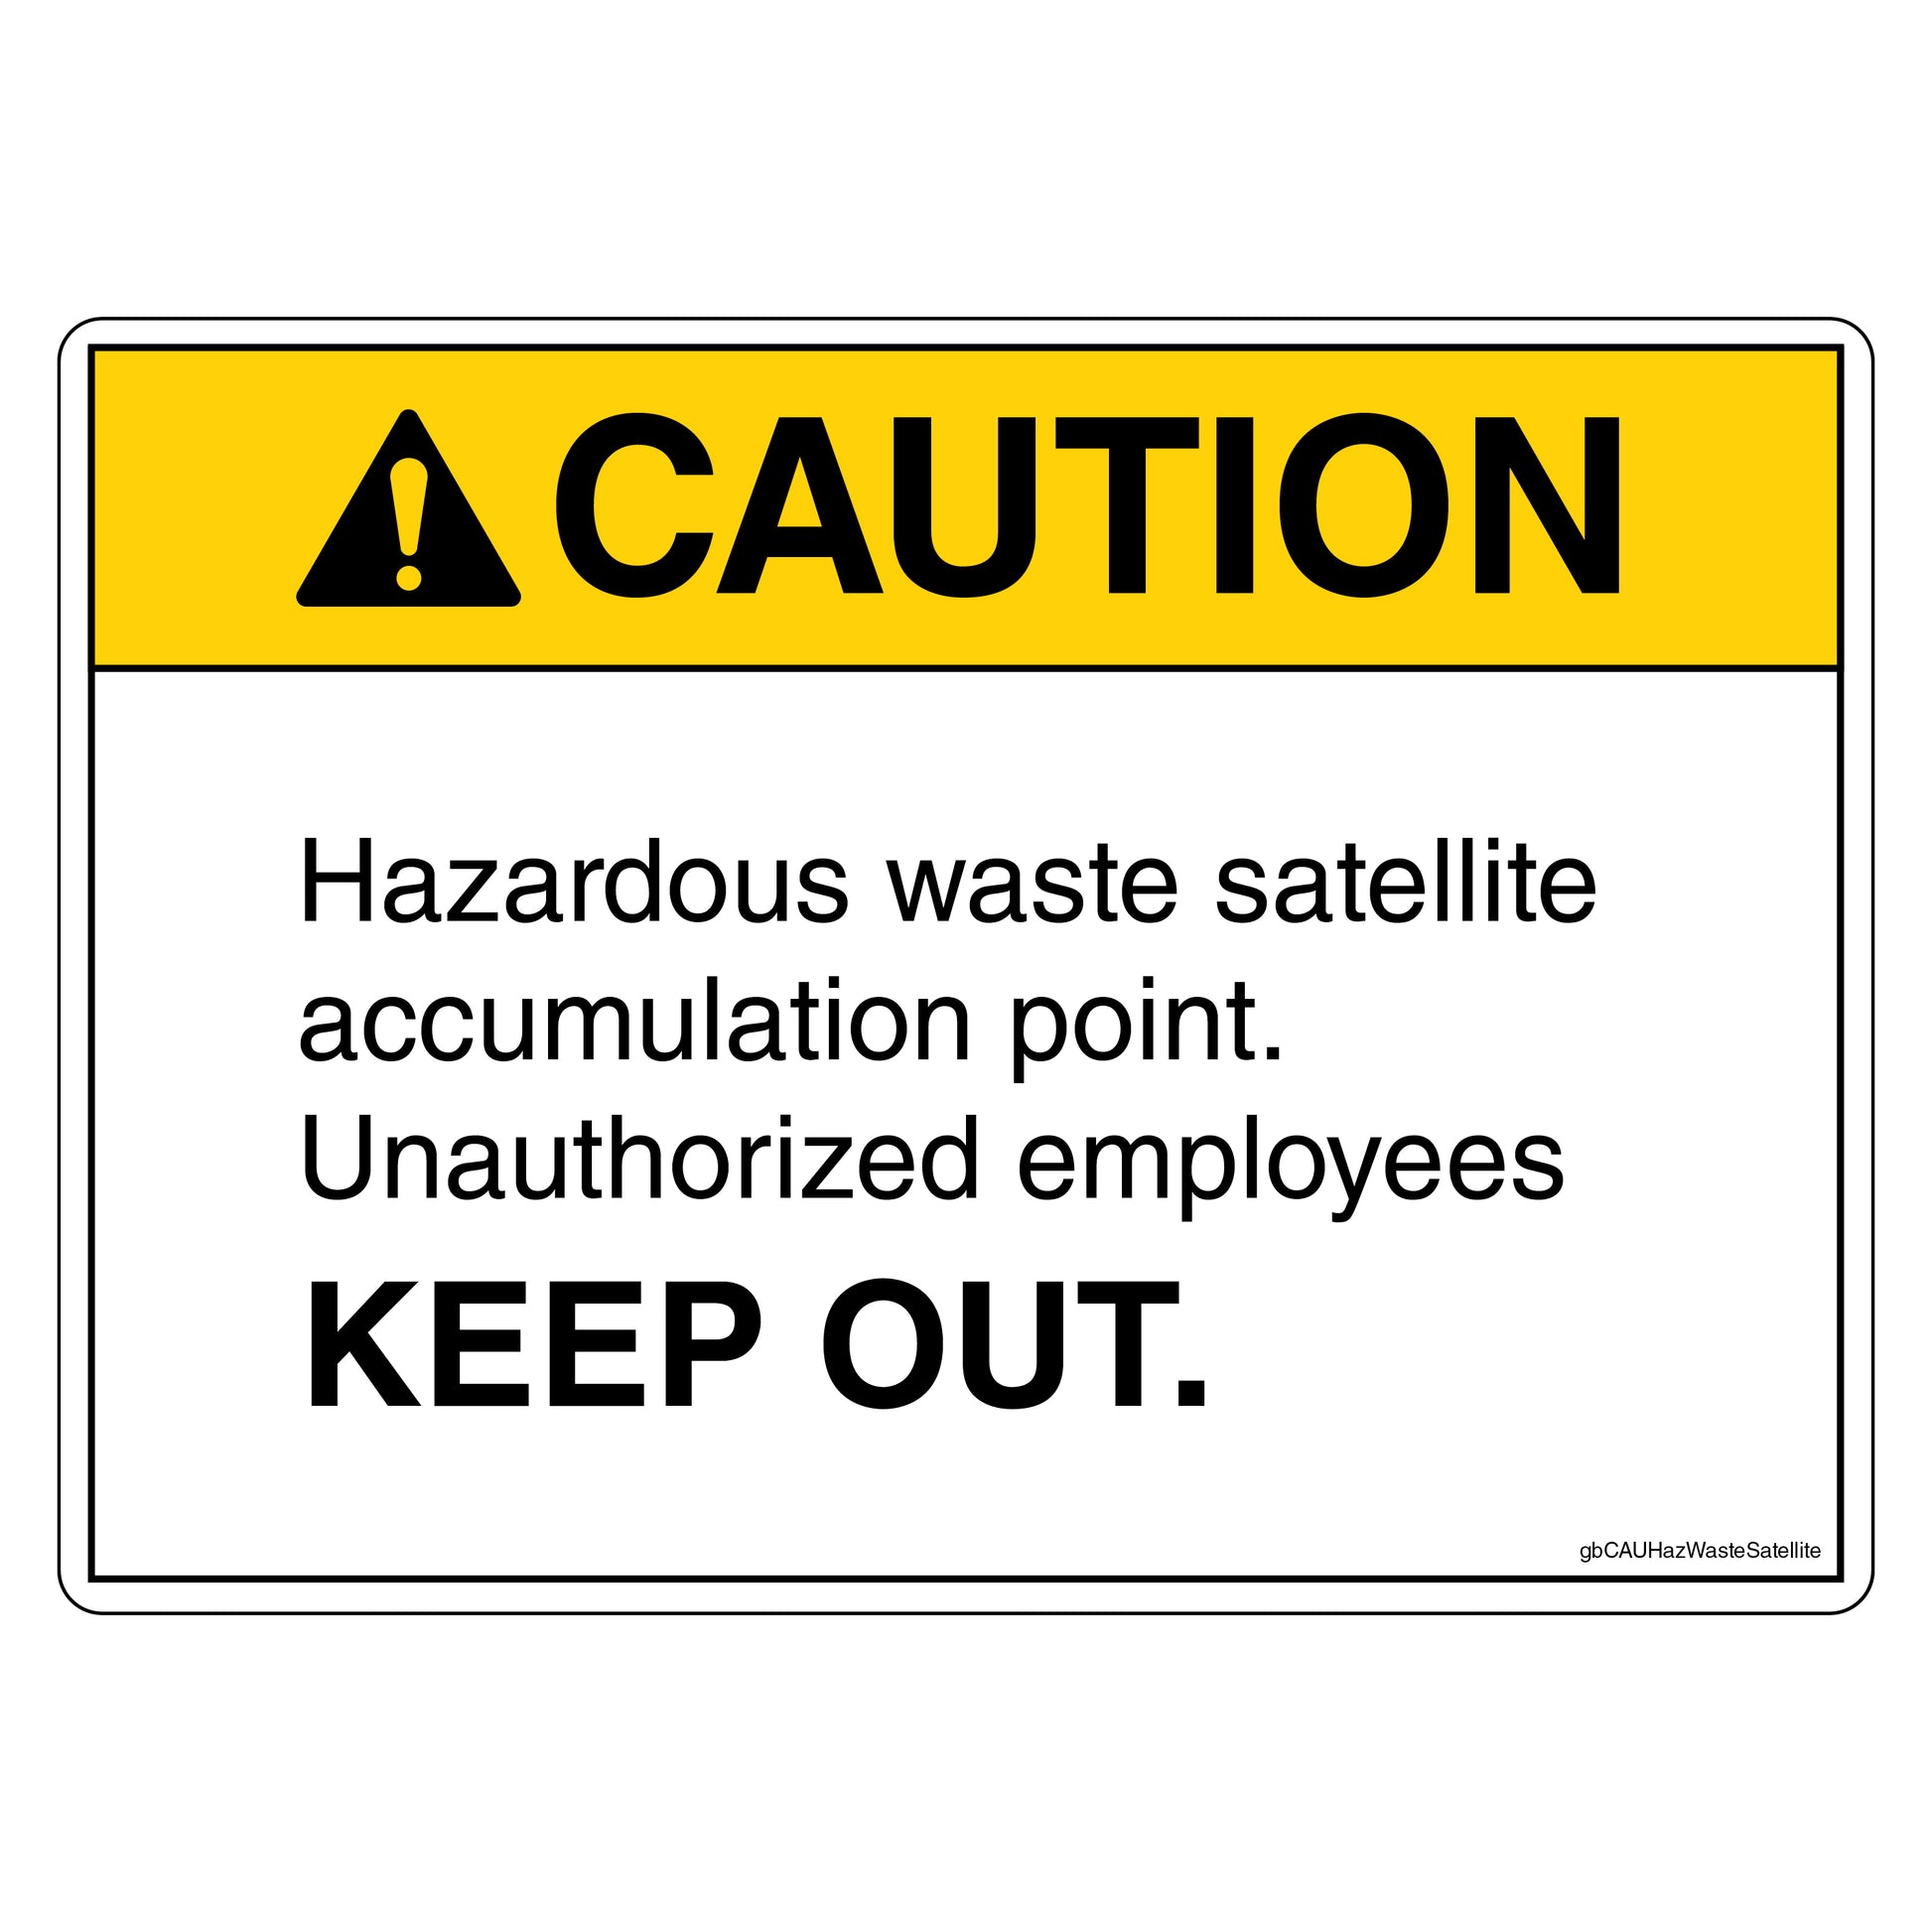 Caution Hazardous Waste Satellite Accumulation Point Unauthorized Employees Keep Out Decal.